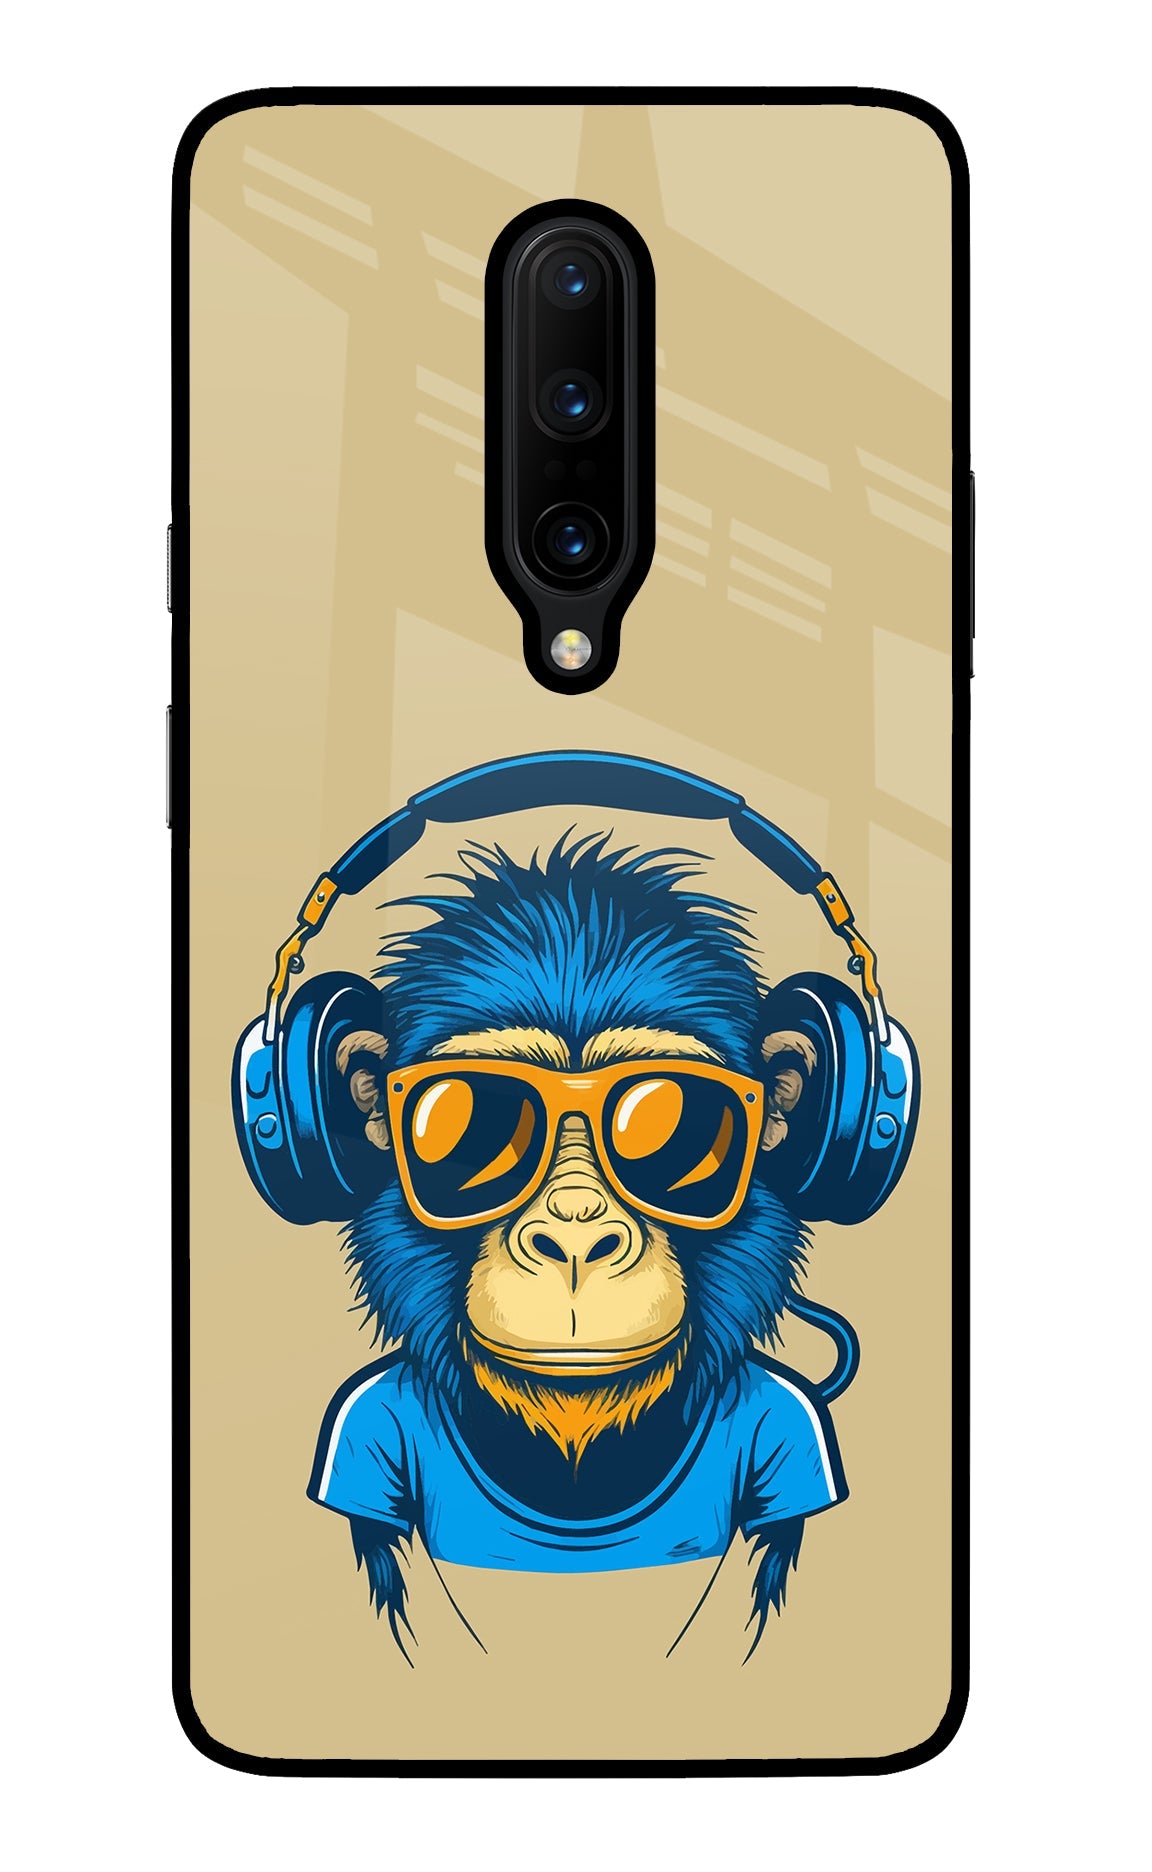 Monkey Headphone Oneplus 7 Pro Glass Case